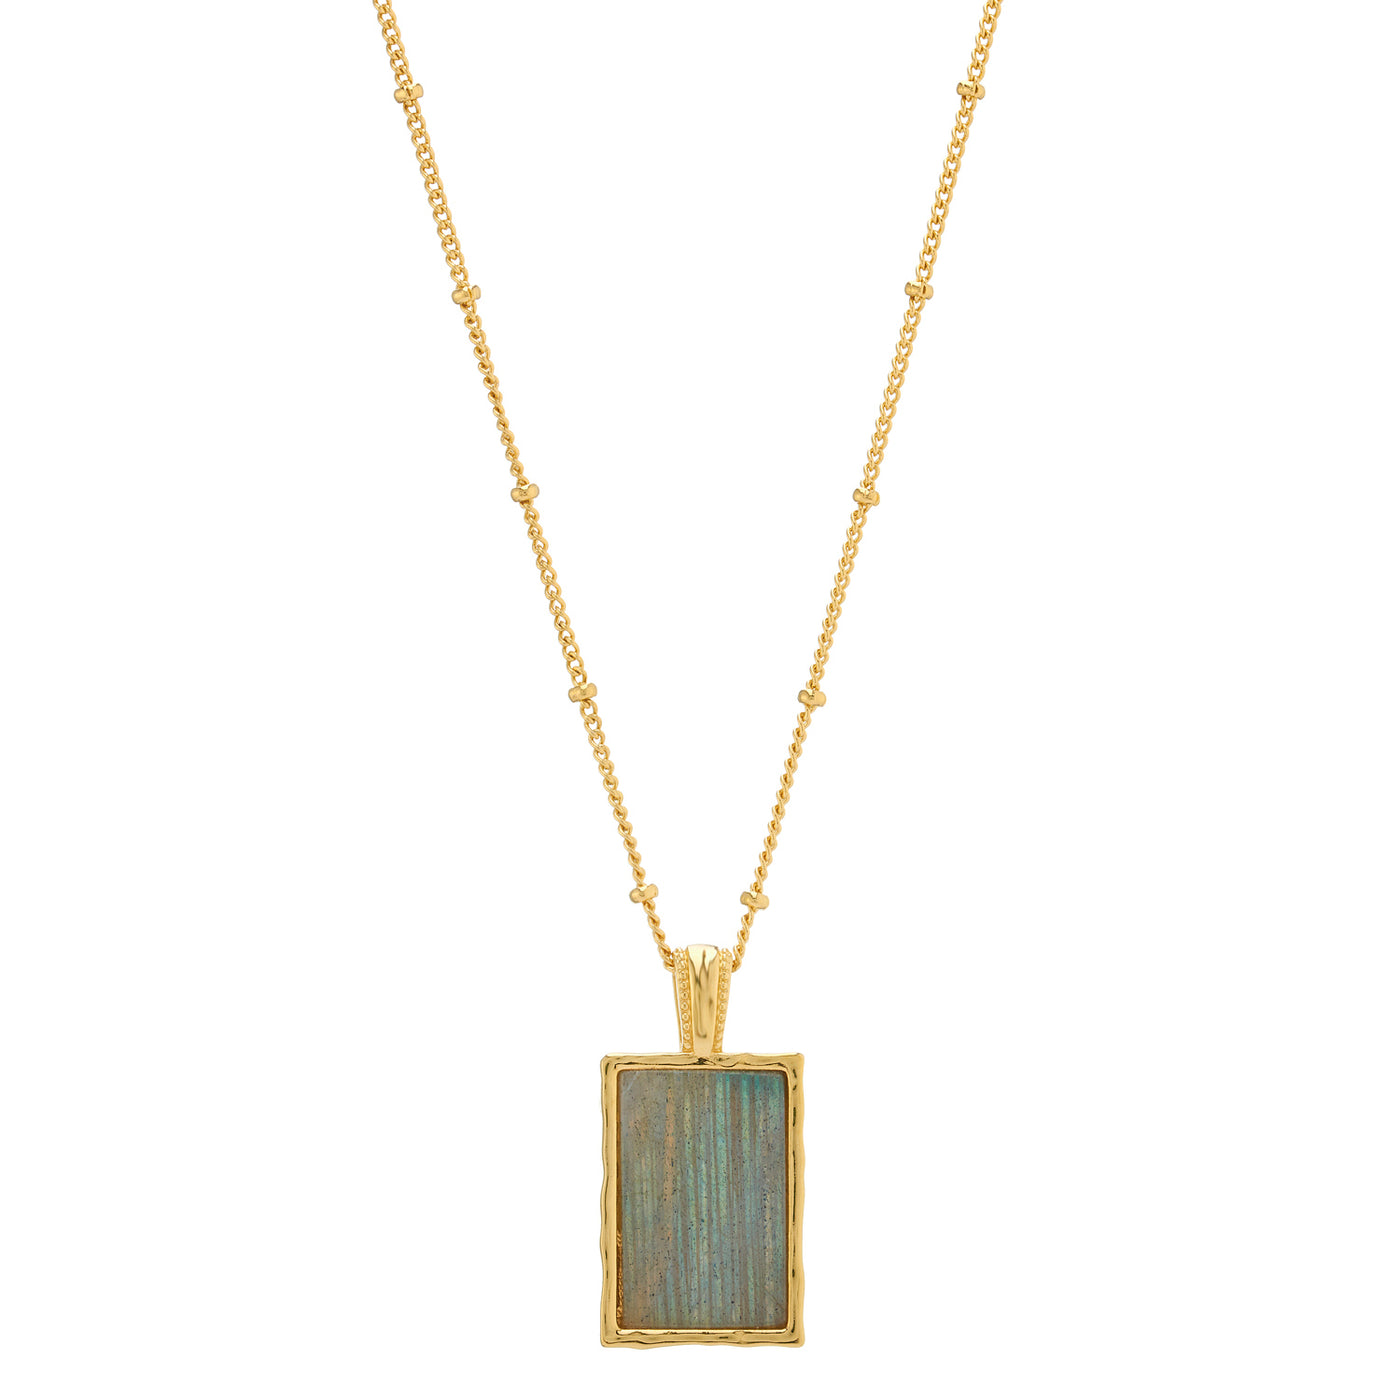 Gold labradorite rectangle pendant necklace with bobble chain